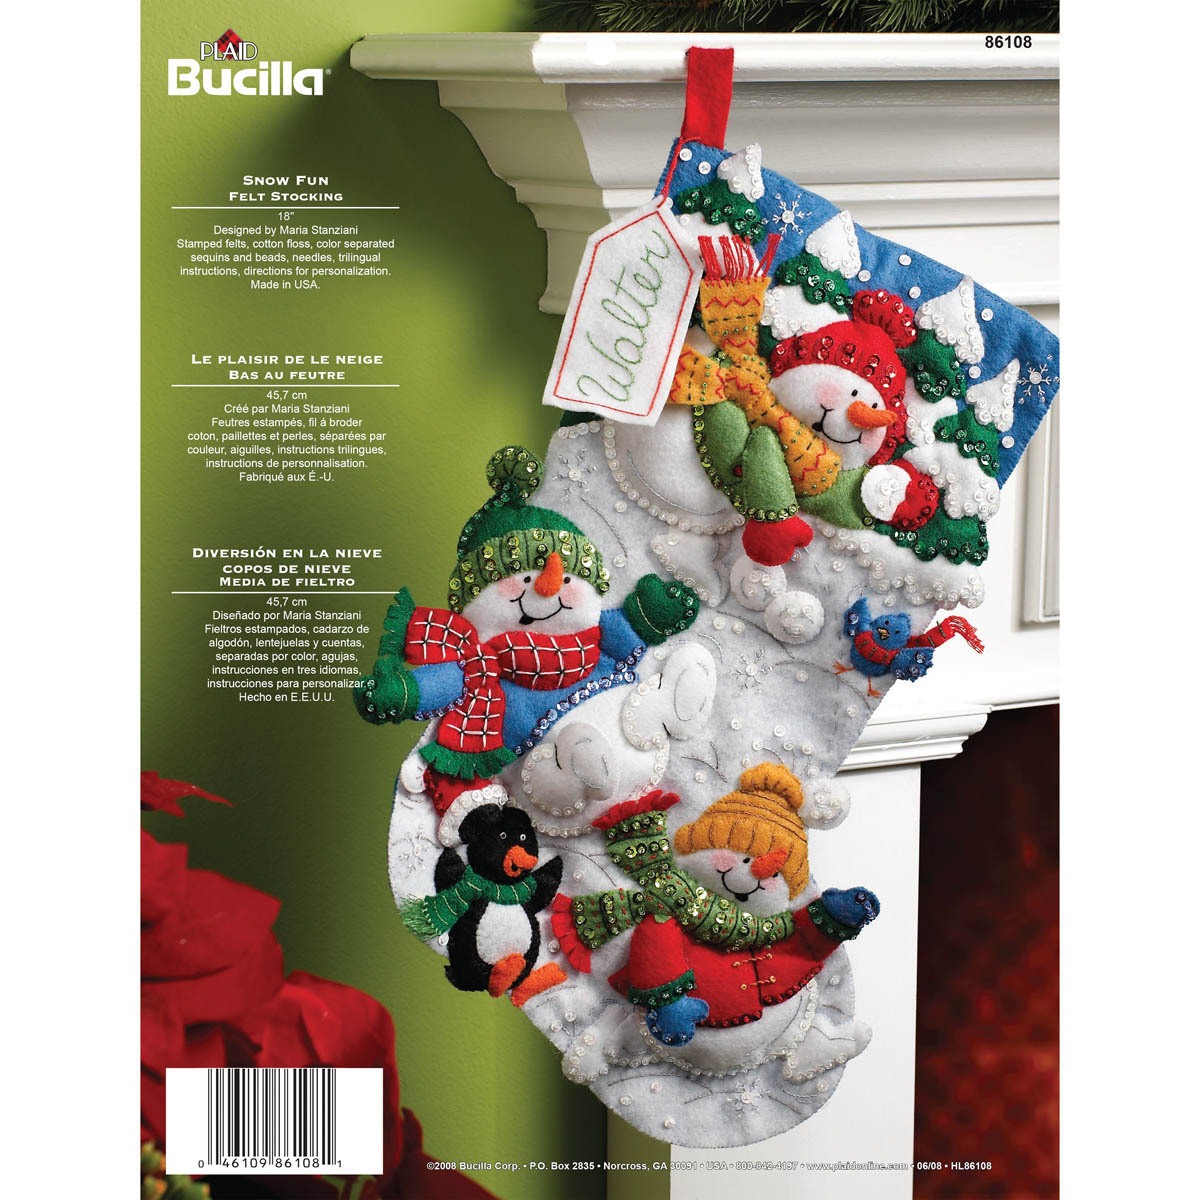 Bucilla Felt Stocking Kit, Teamwork Santa